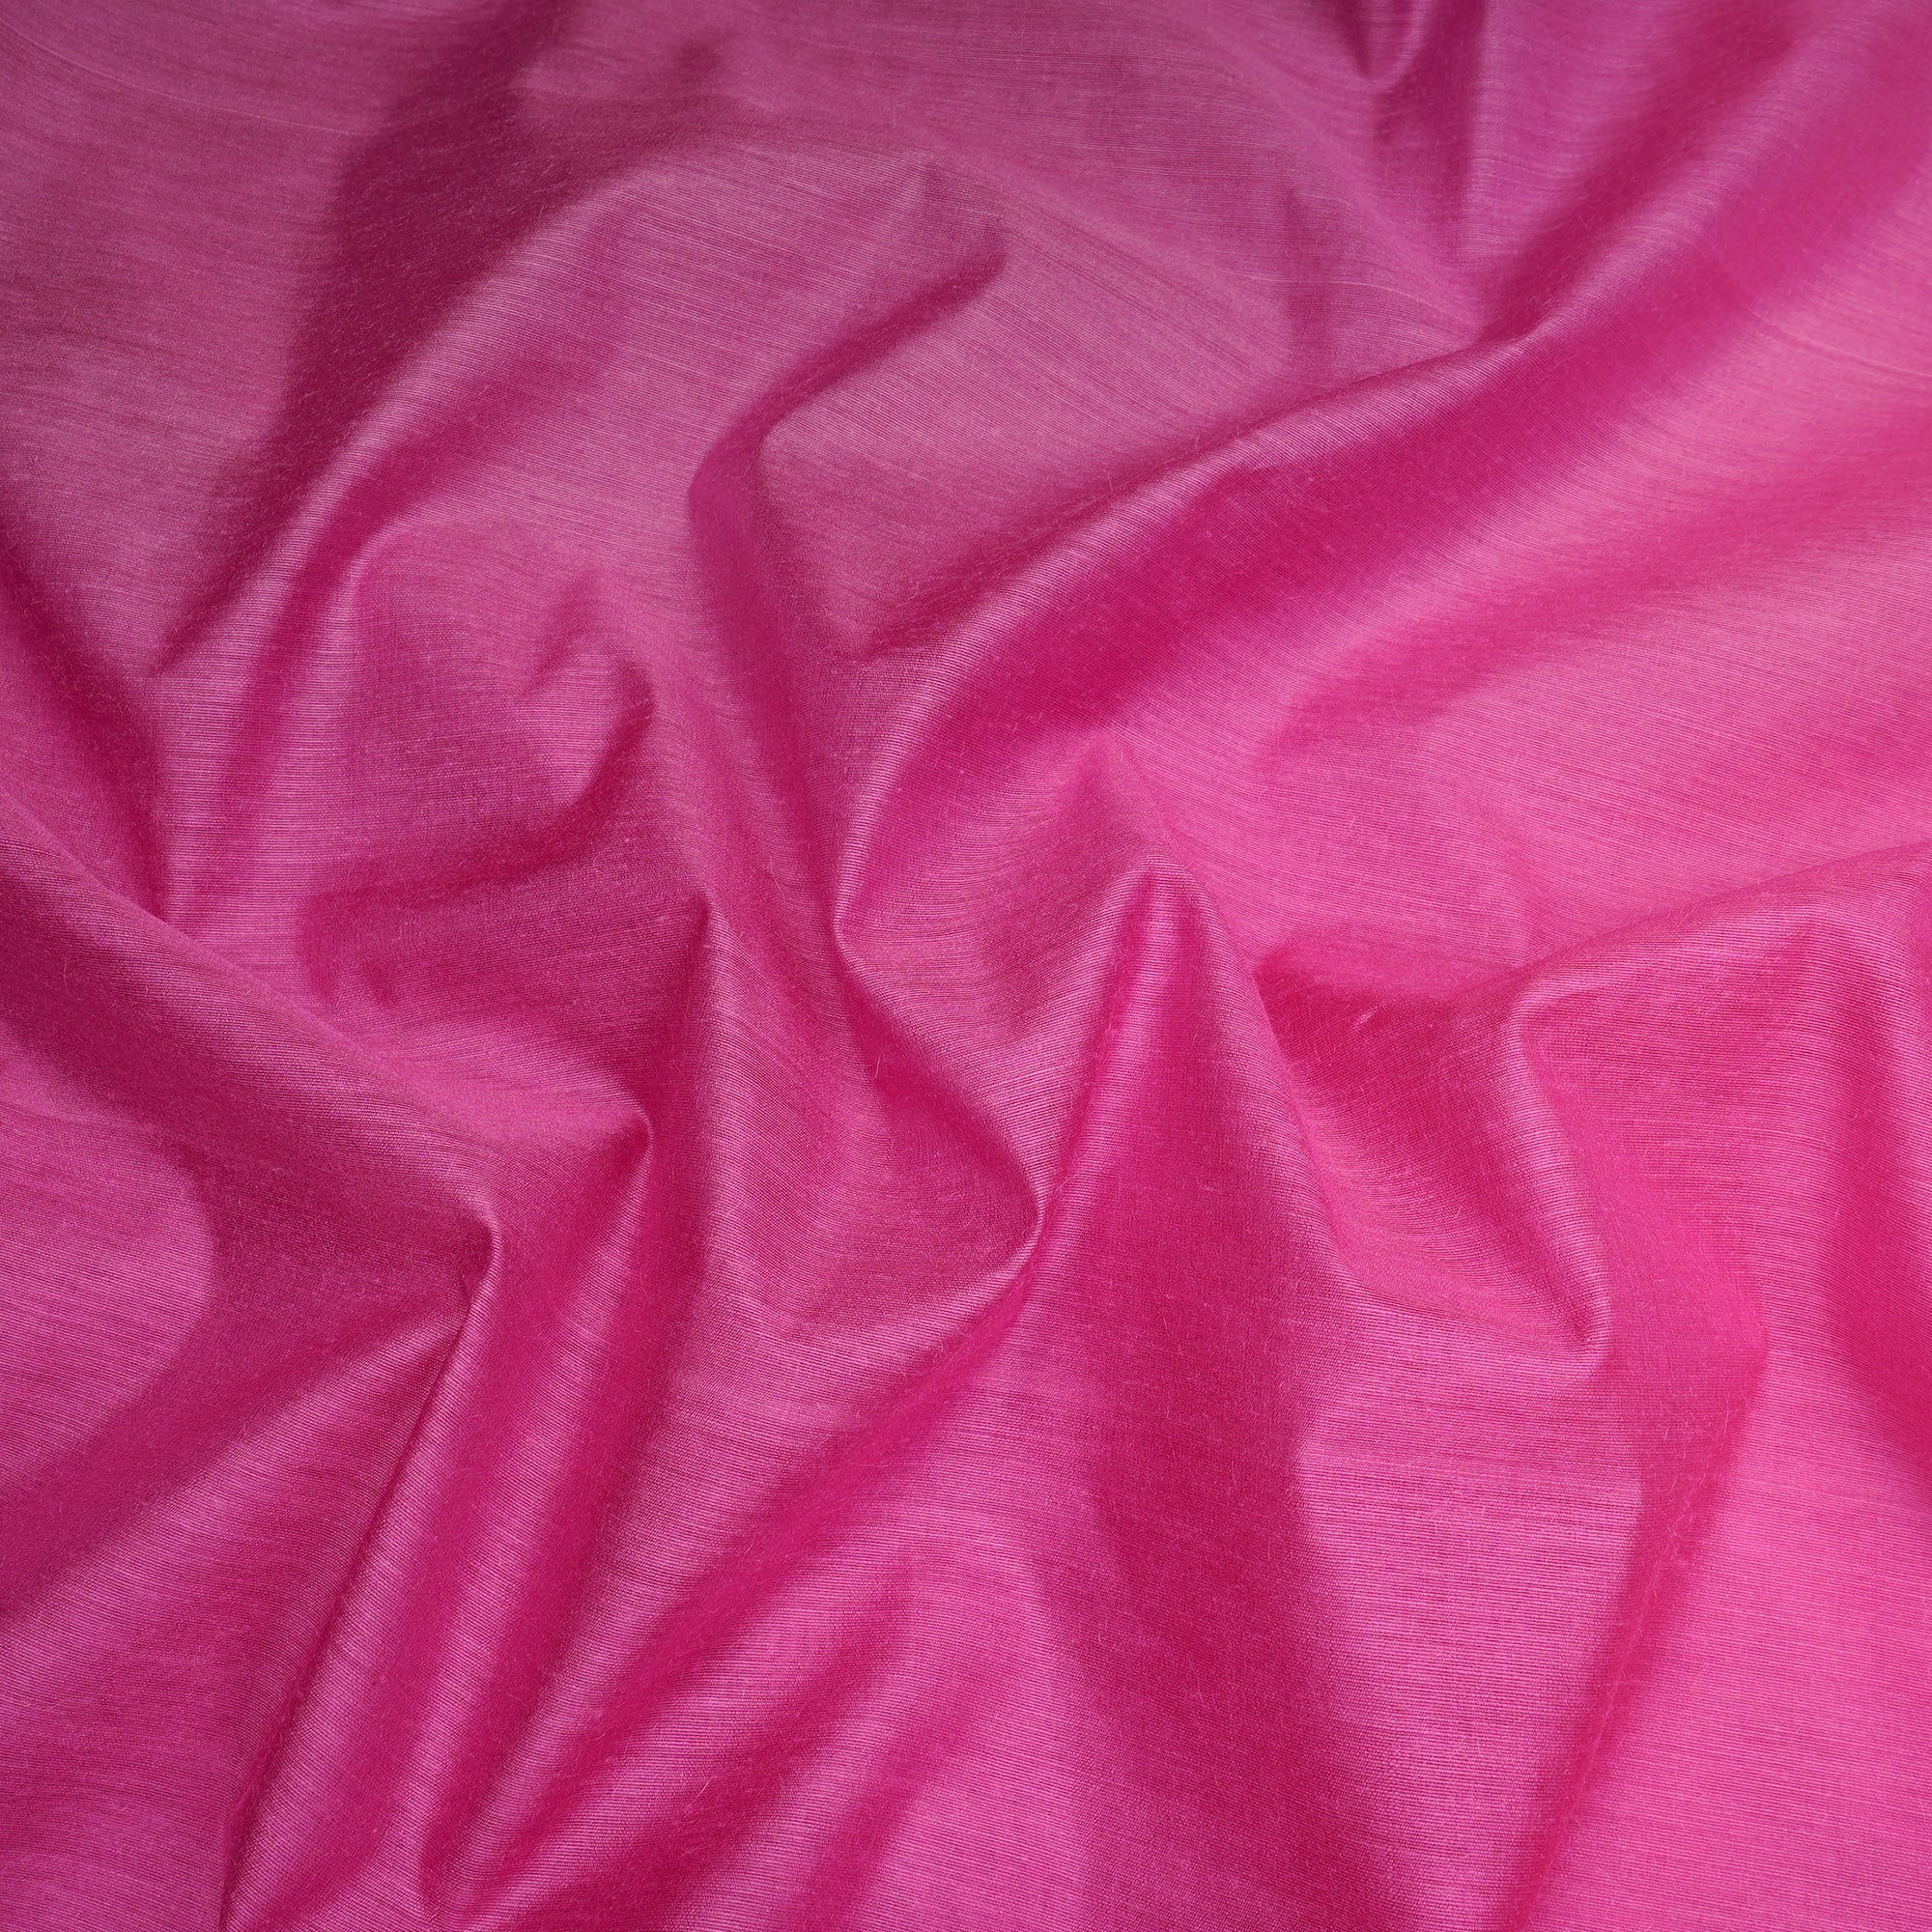 Rani Pink Ombre Dyed Tussar Muga Fabric